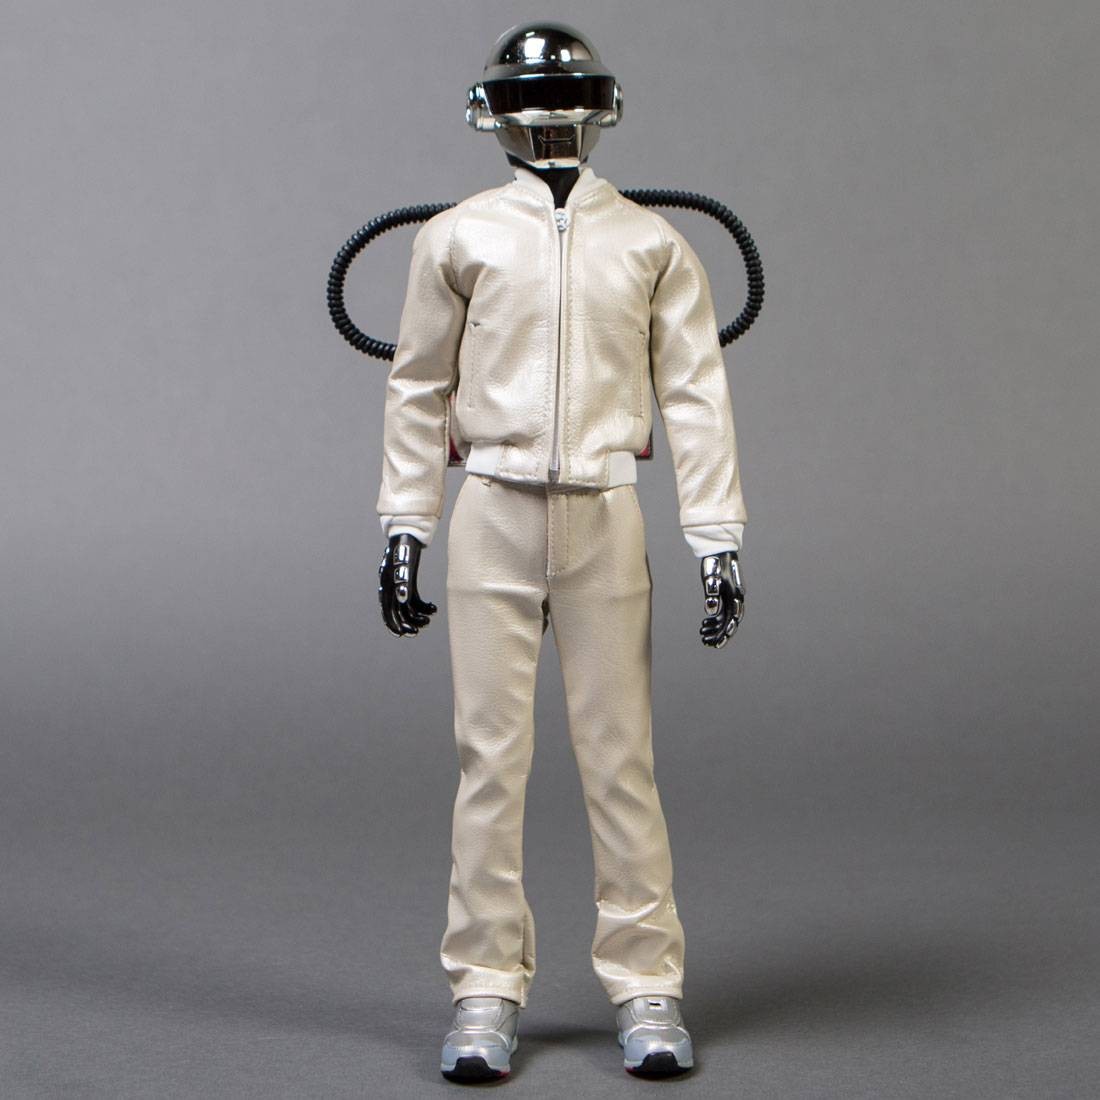 Medicom RAH Daft Punk Discovery Ver. 2.0 - Thomas Bangalter Figure (silver)